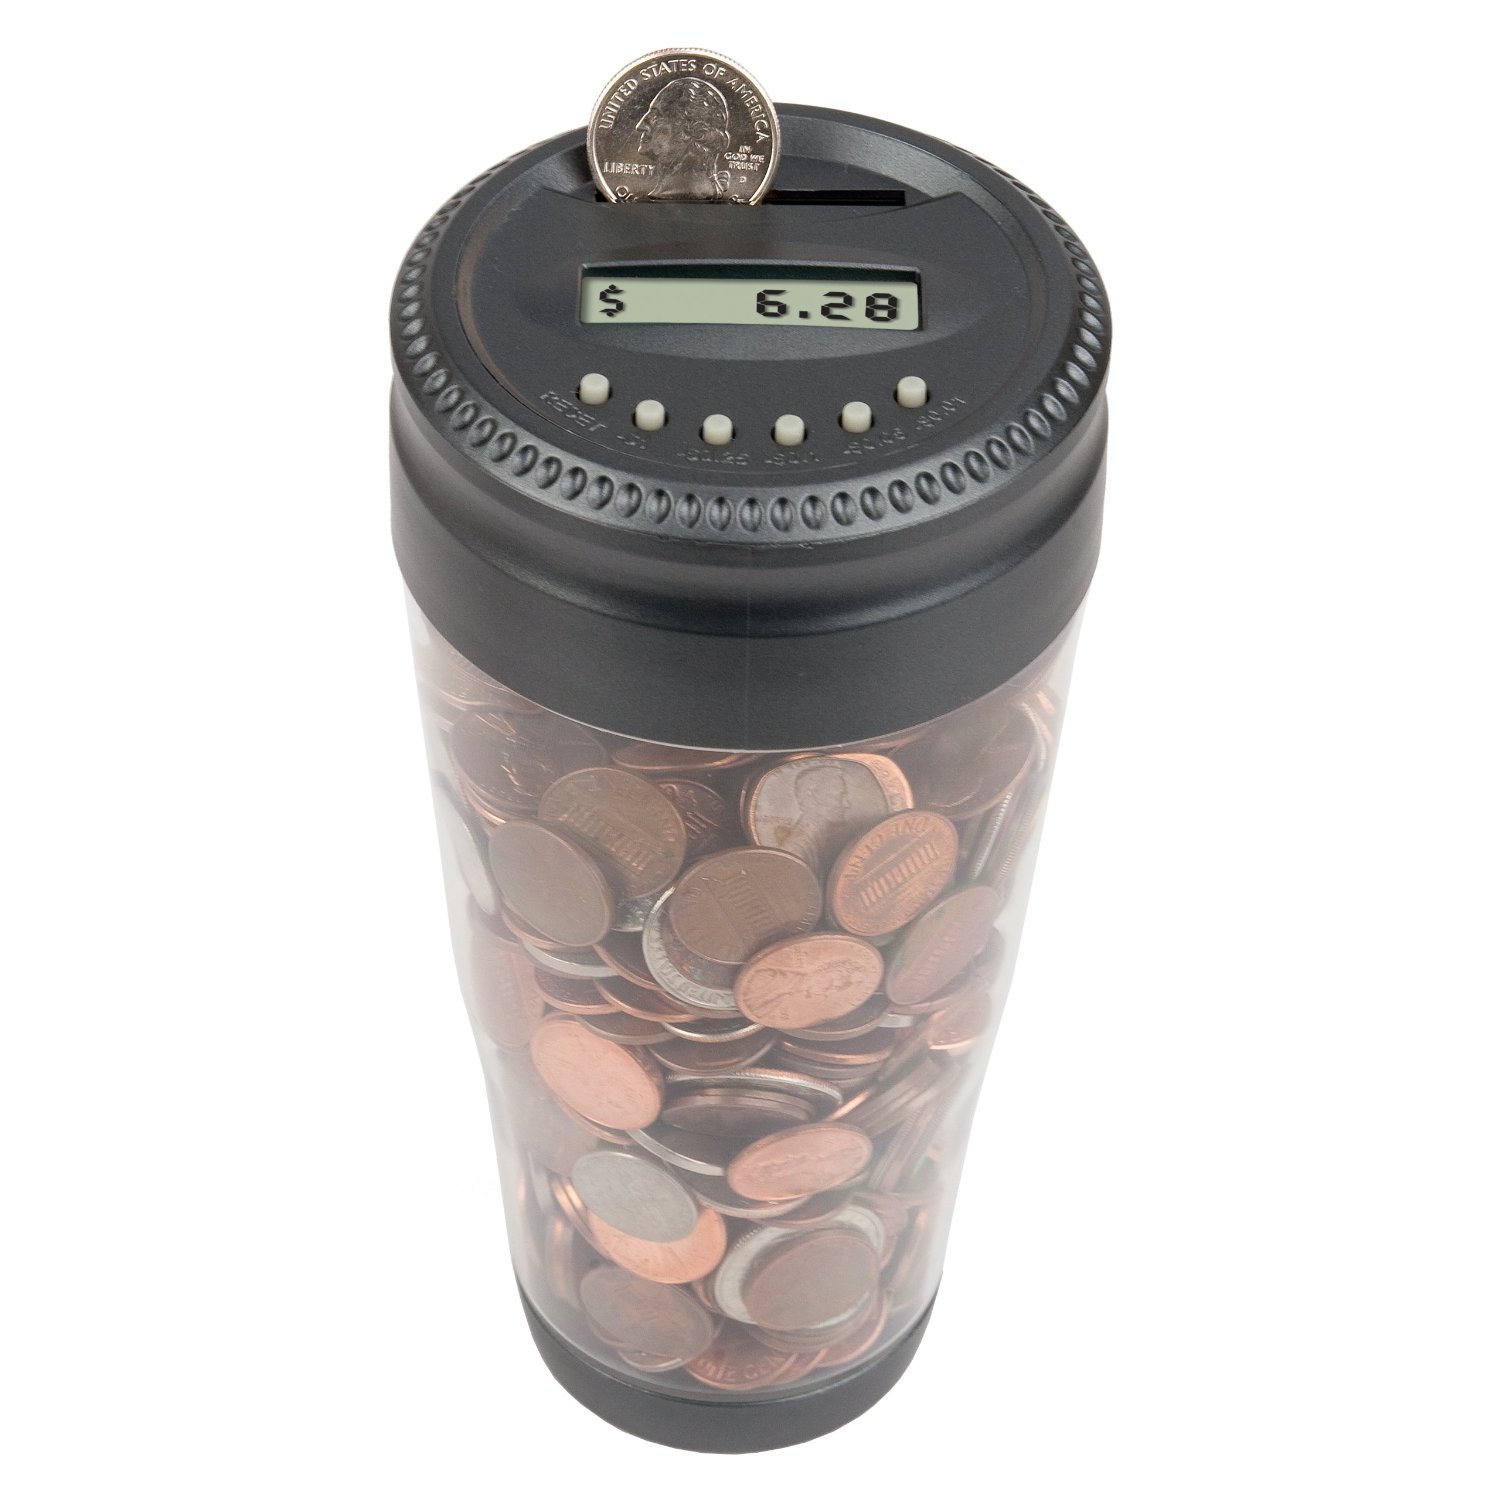 Totes Men's Auto Coin Jar $4.09